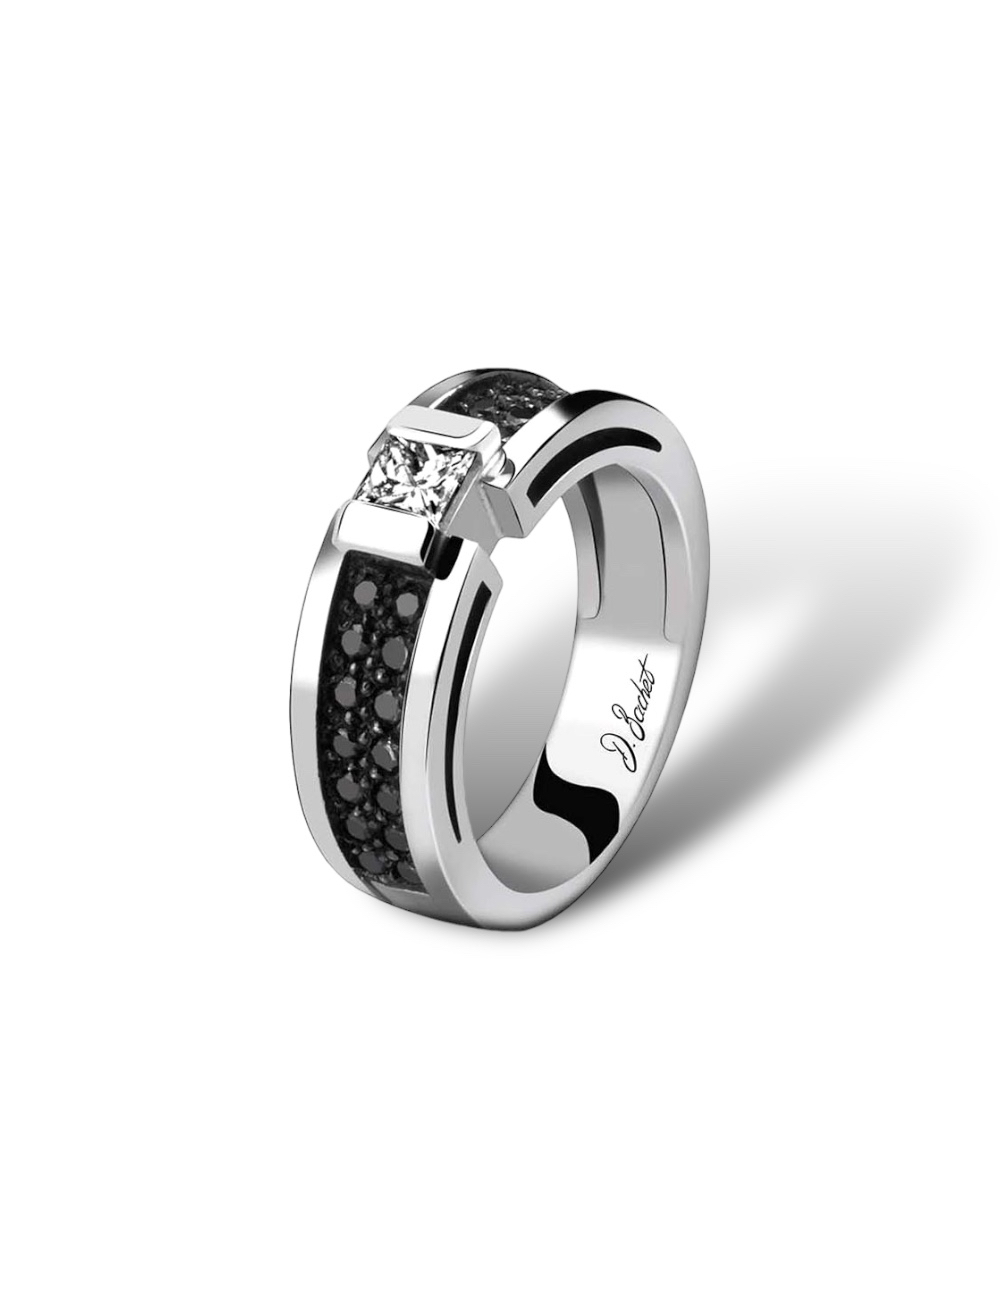 Shade engagement ring with 0.30ct princess-cut white diamond and black diamond pavé in platinum.